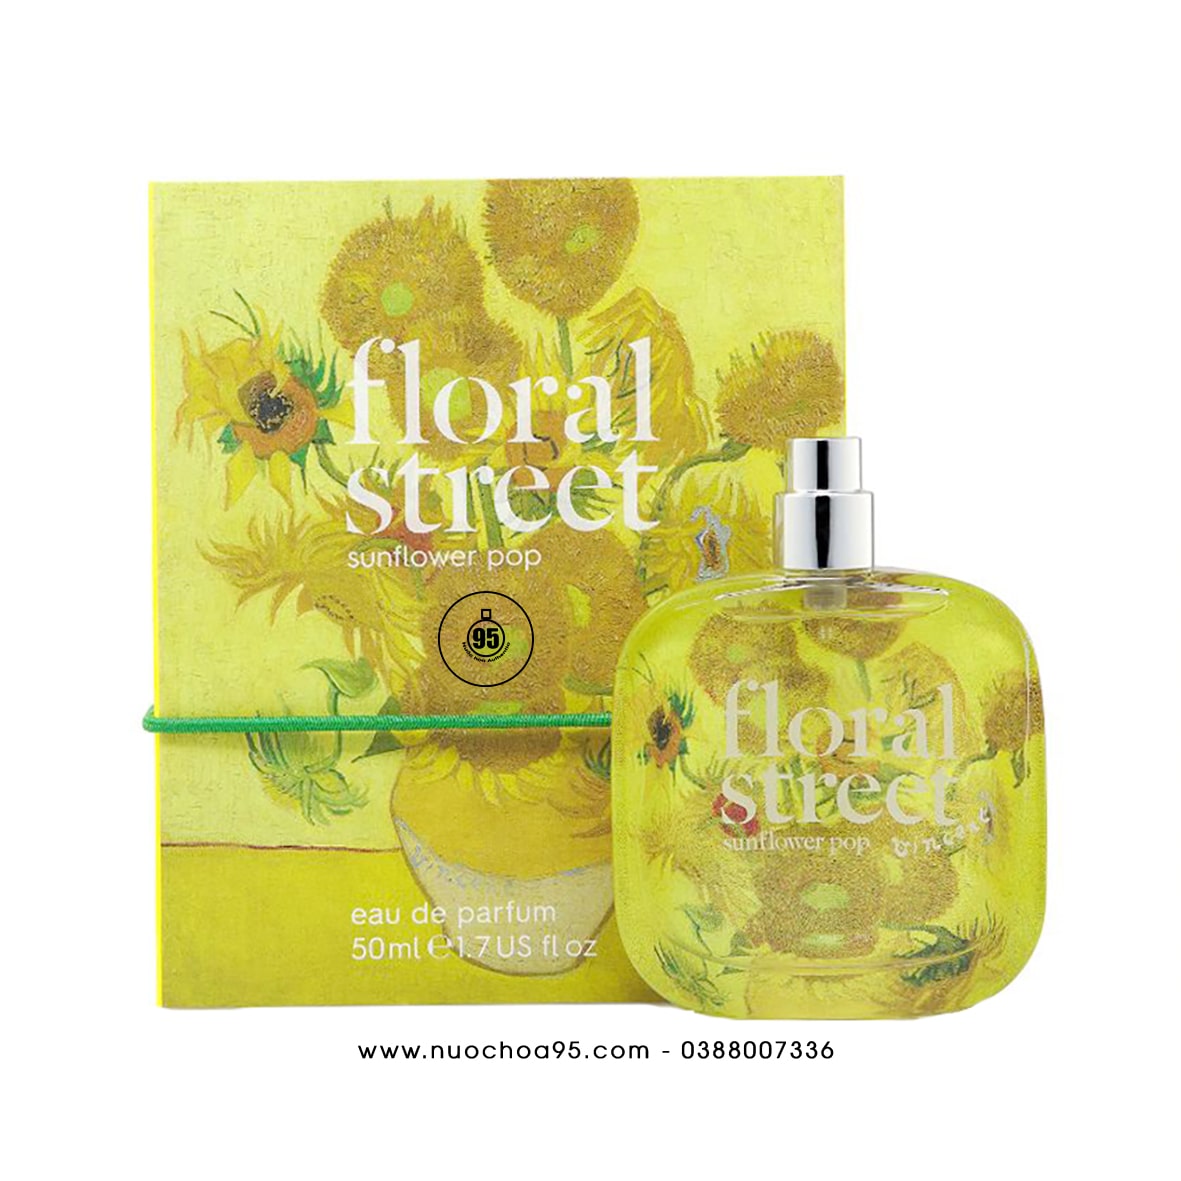 Nước hoa Floral Street Sunflower Pop